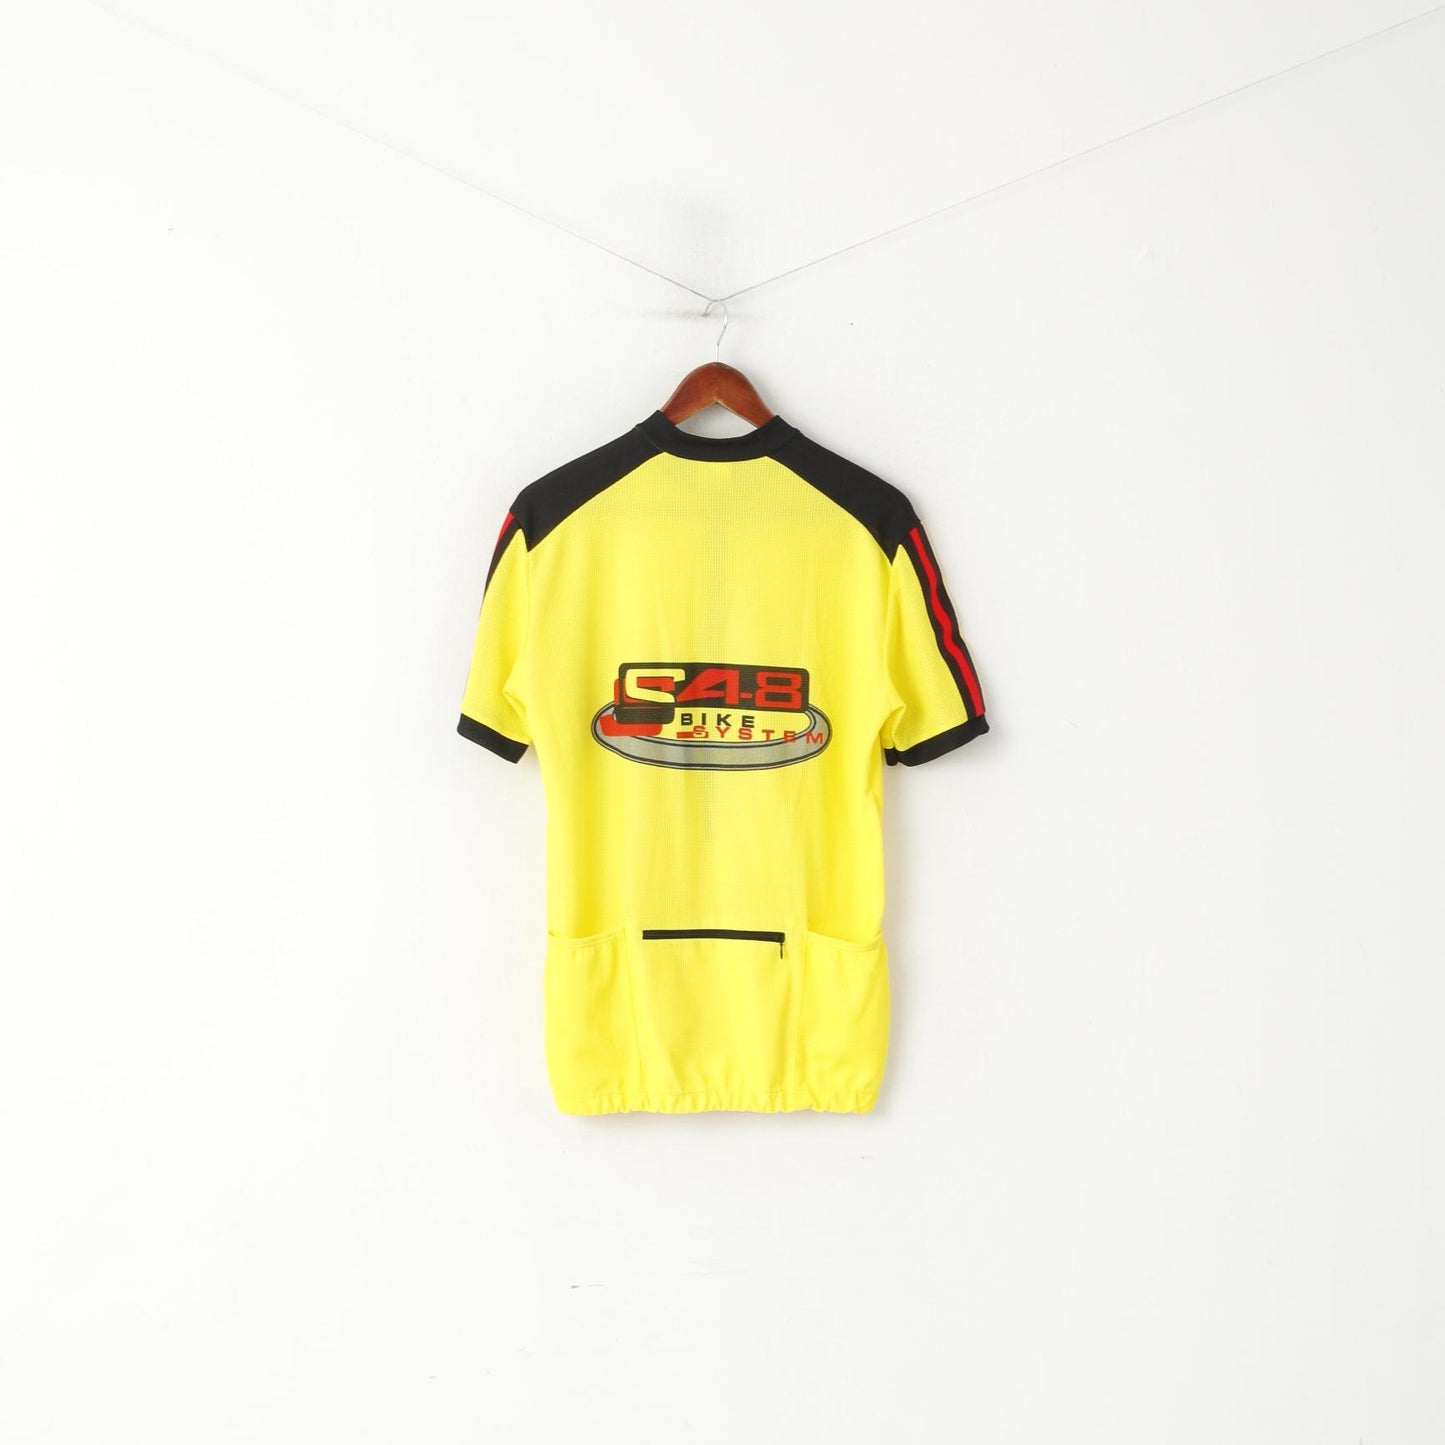 Loffler Men S Cycling Shirt Neon Yellow Sportswear Zip NeckBike System Top